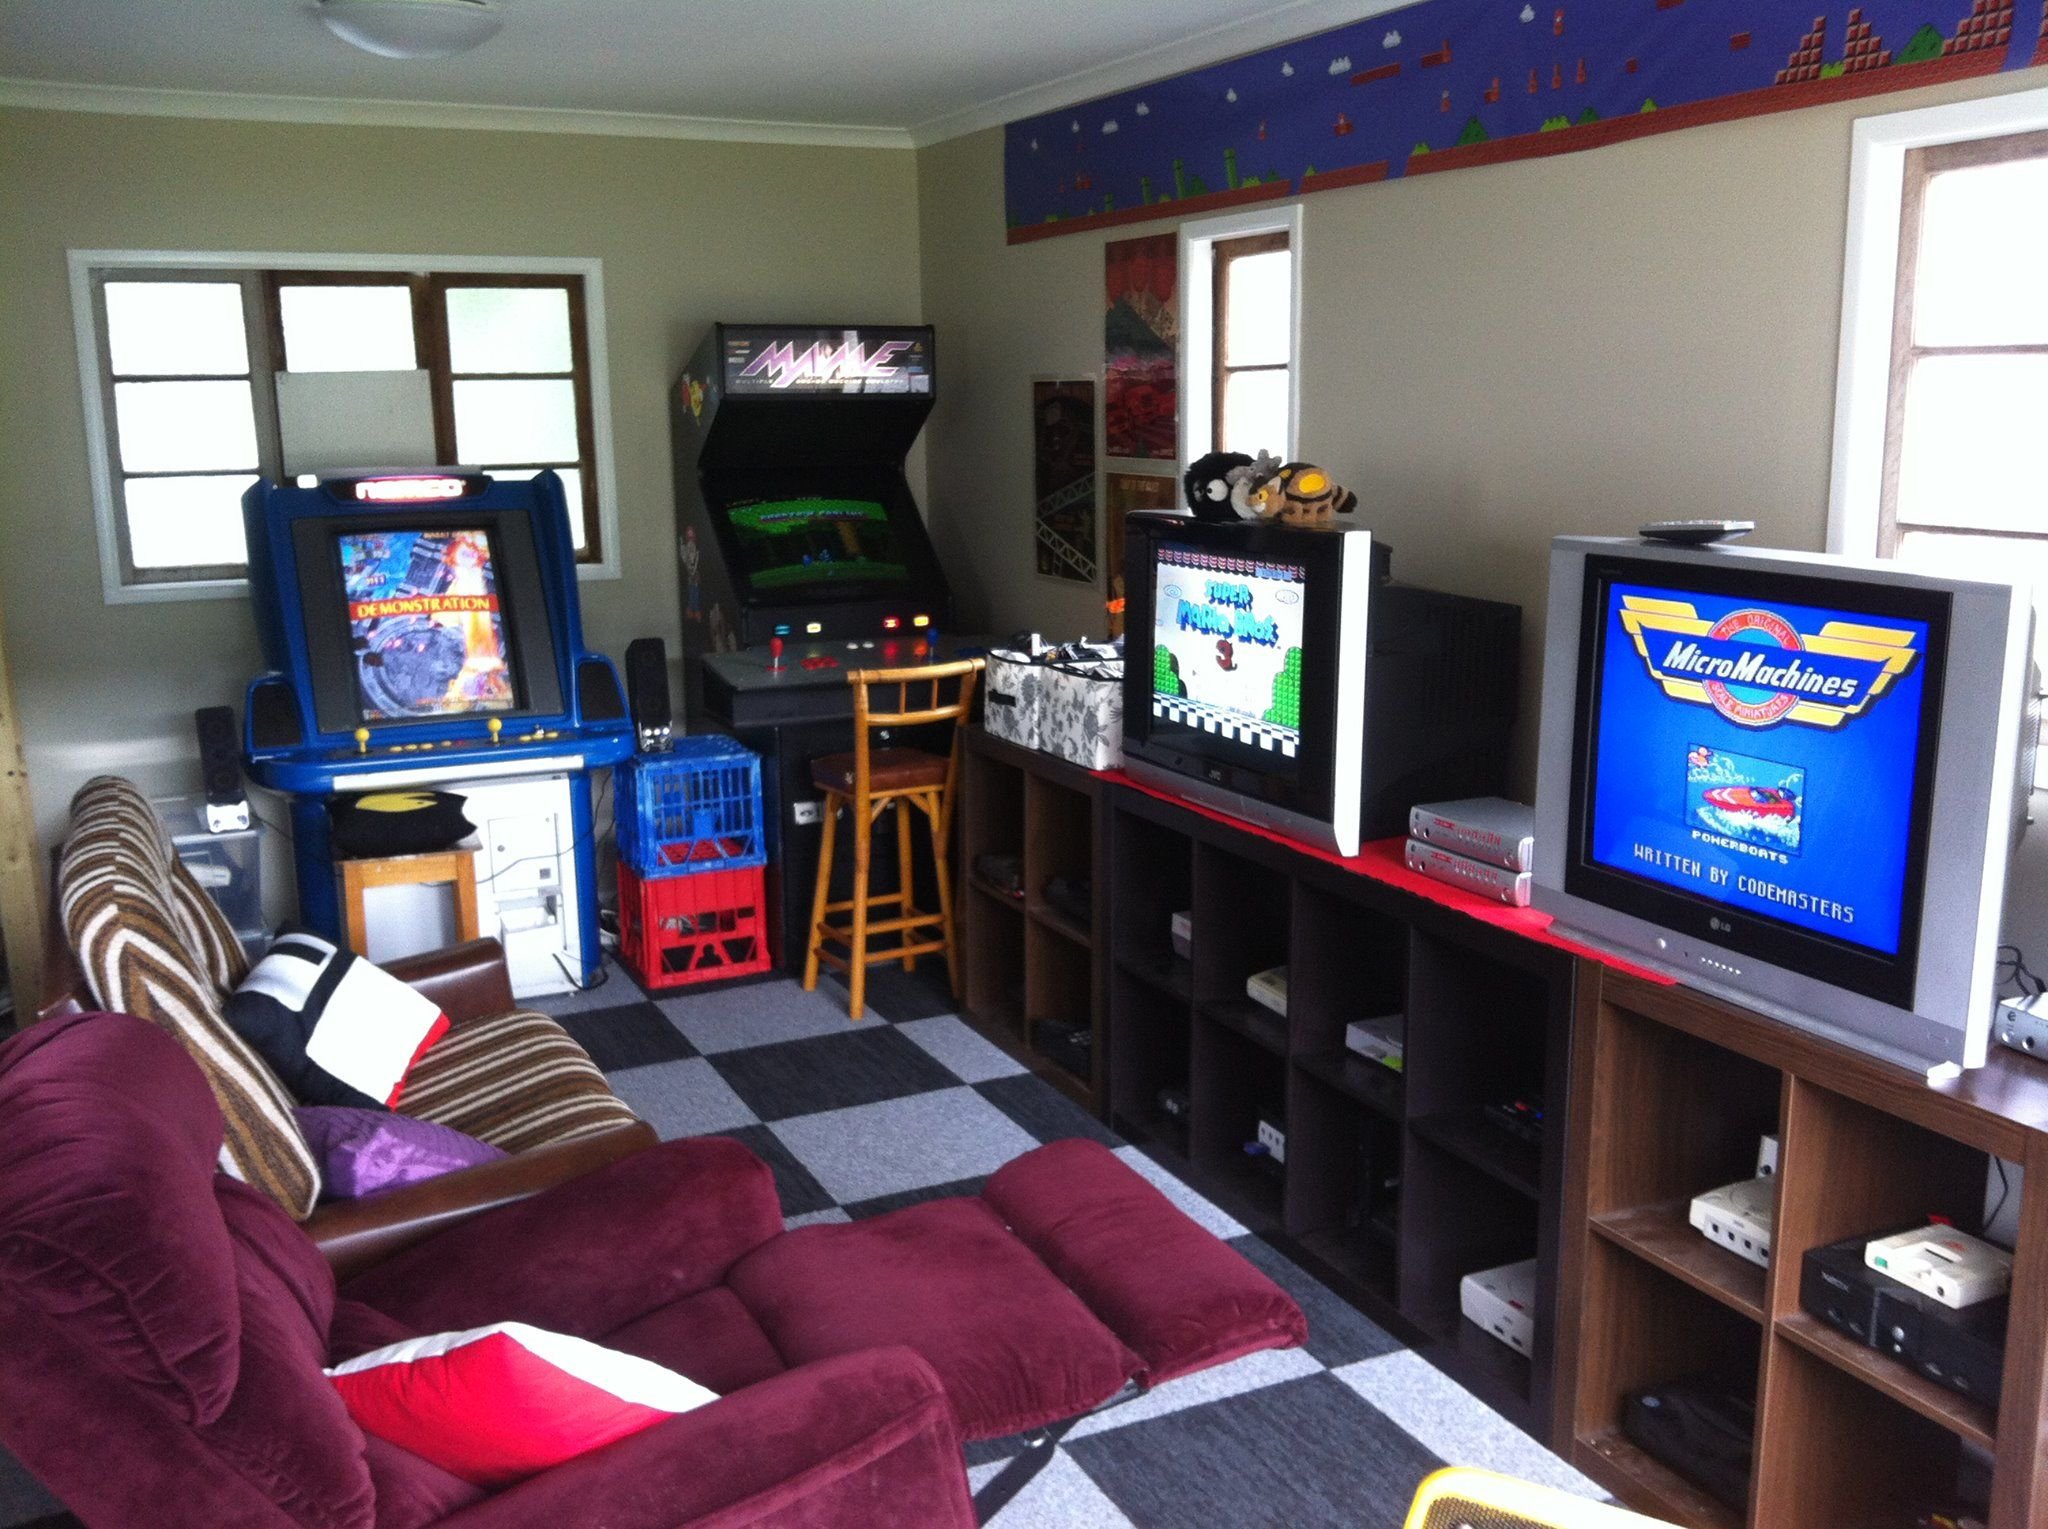 My room game. Крутая игровая комната. Игровая комната подростка. Геймерская комната. Игровая комната геймерская.